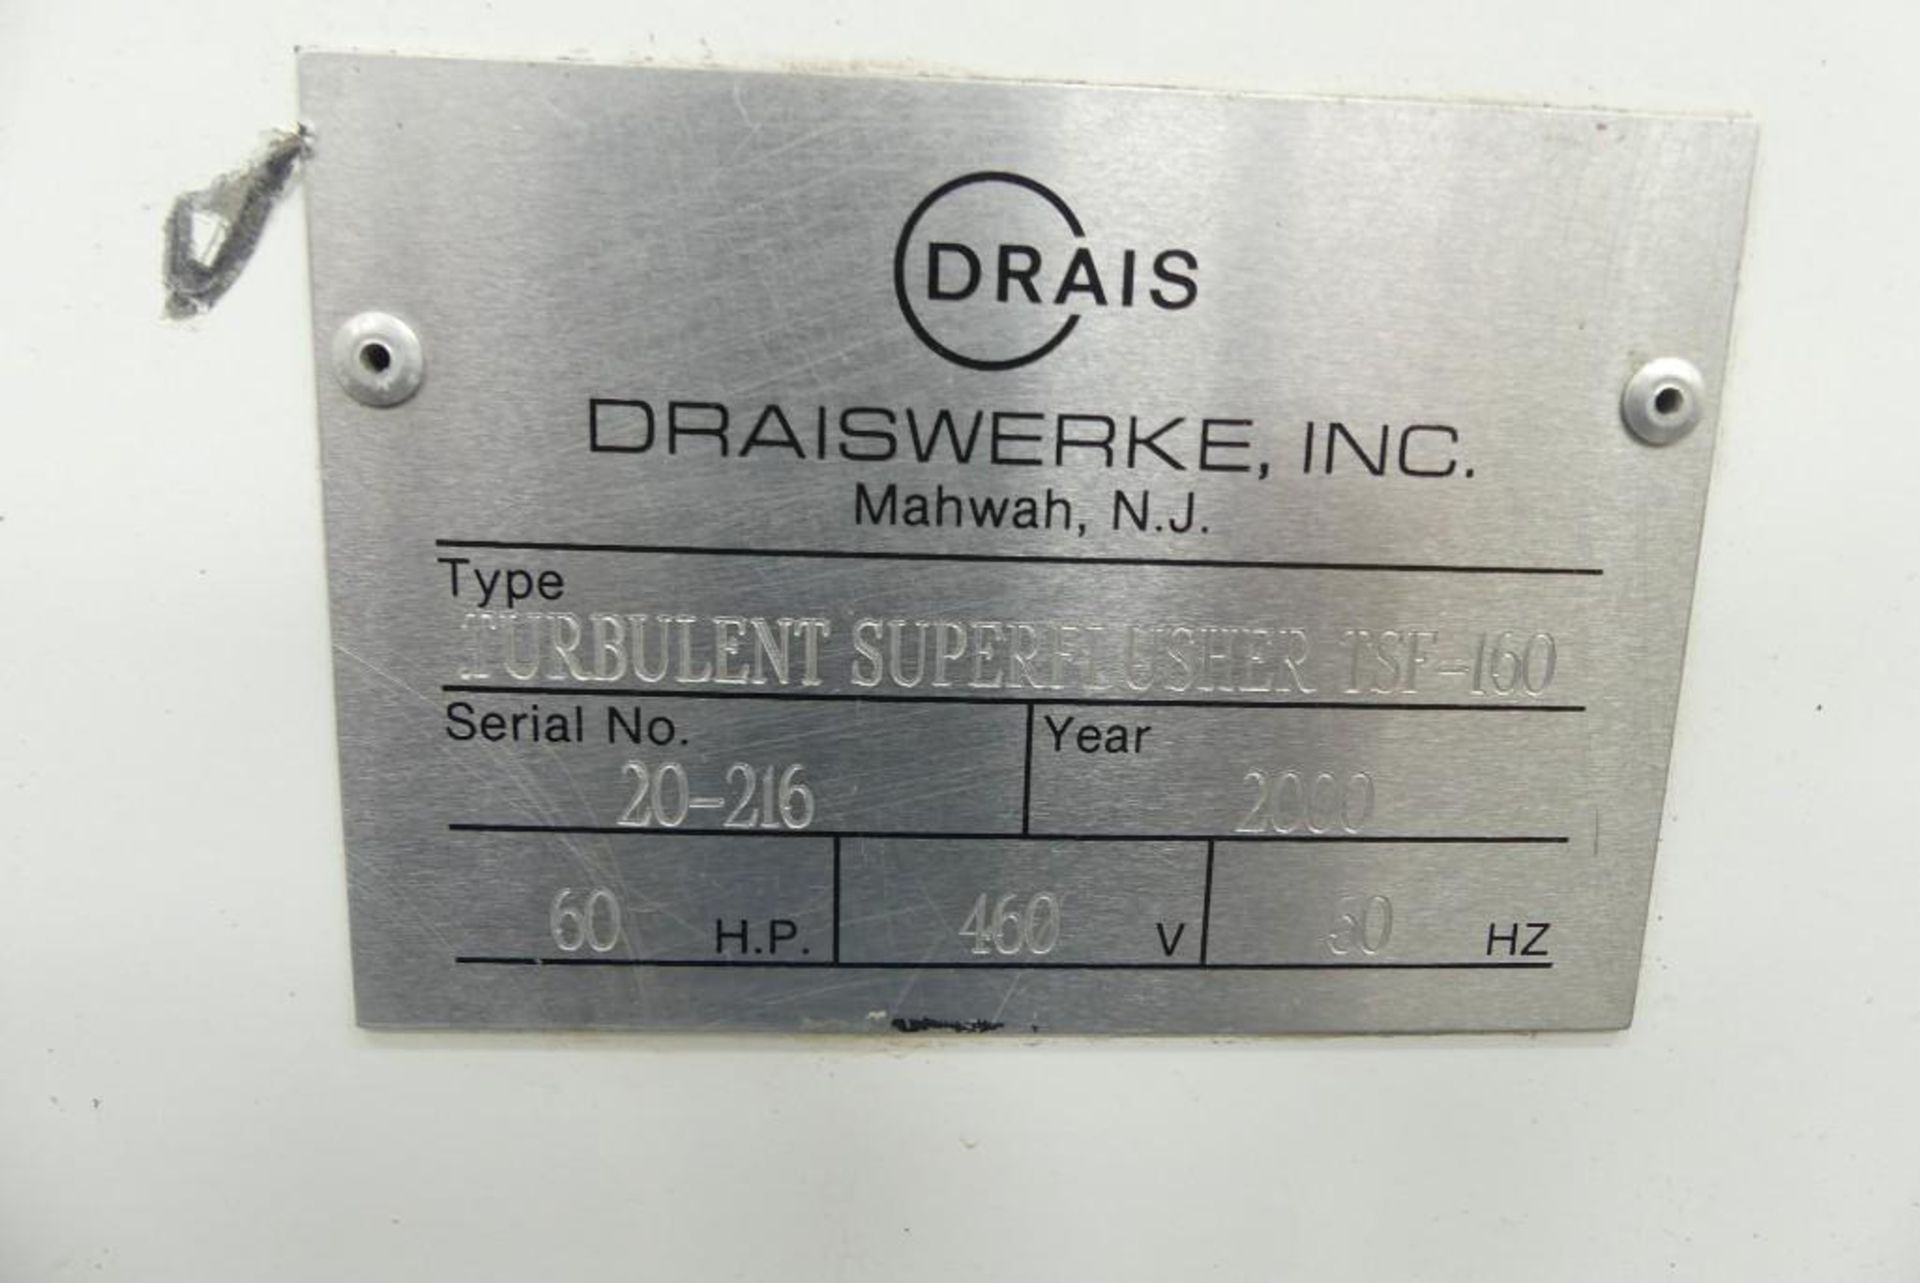 Draiswerke Turbulent Superflusher TSF-160 Mixer - Image 24 of 27